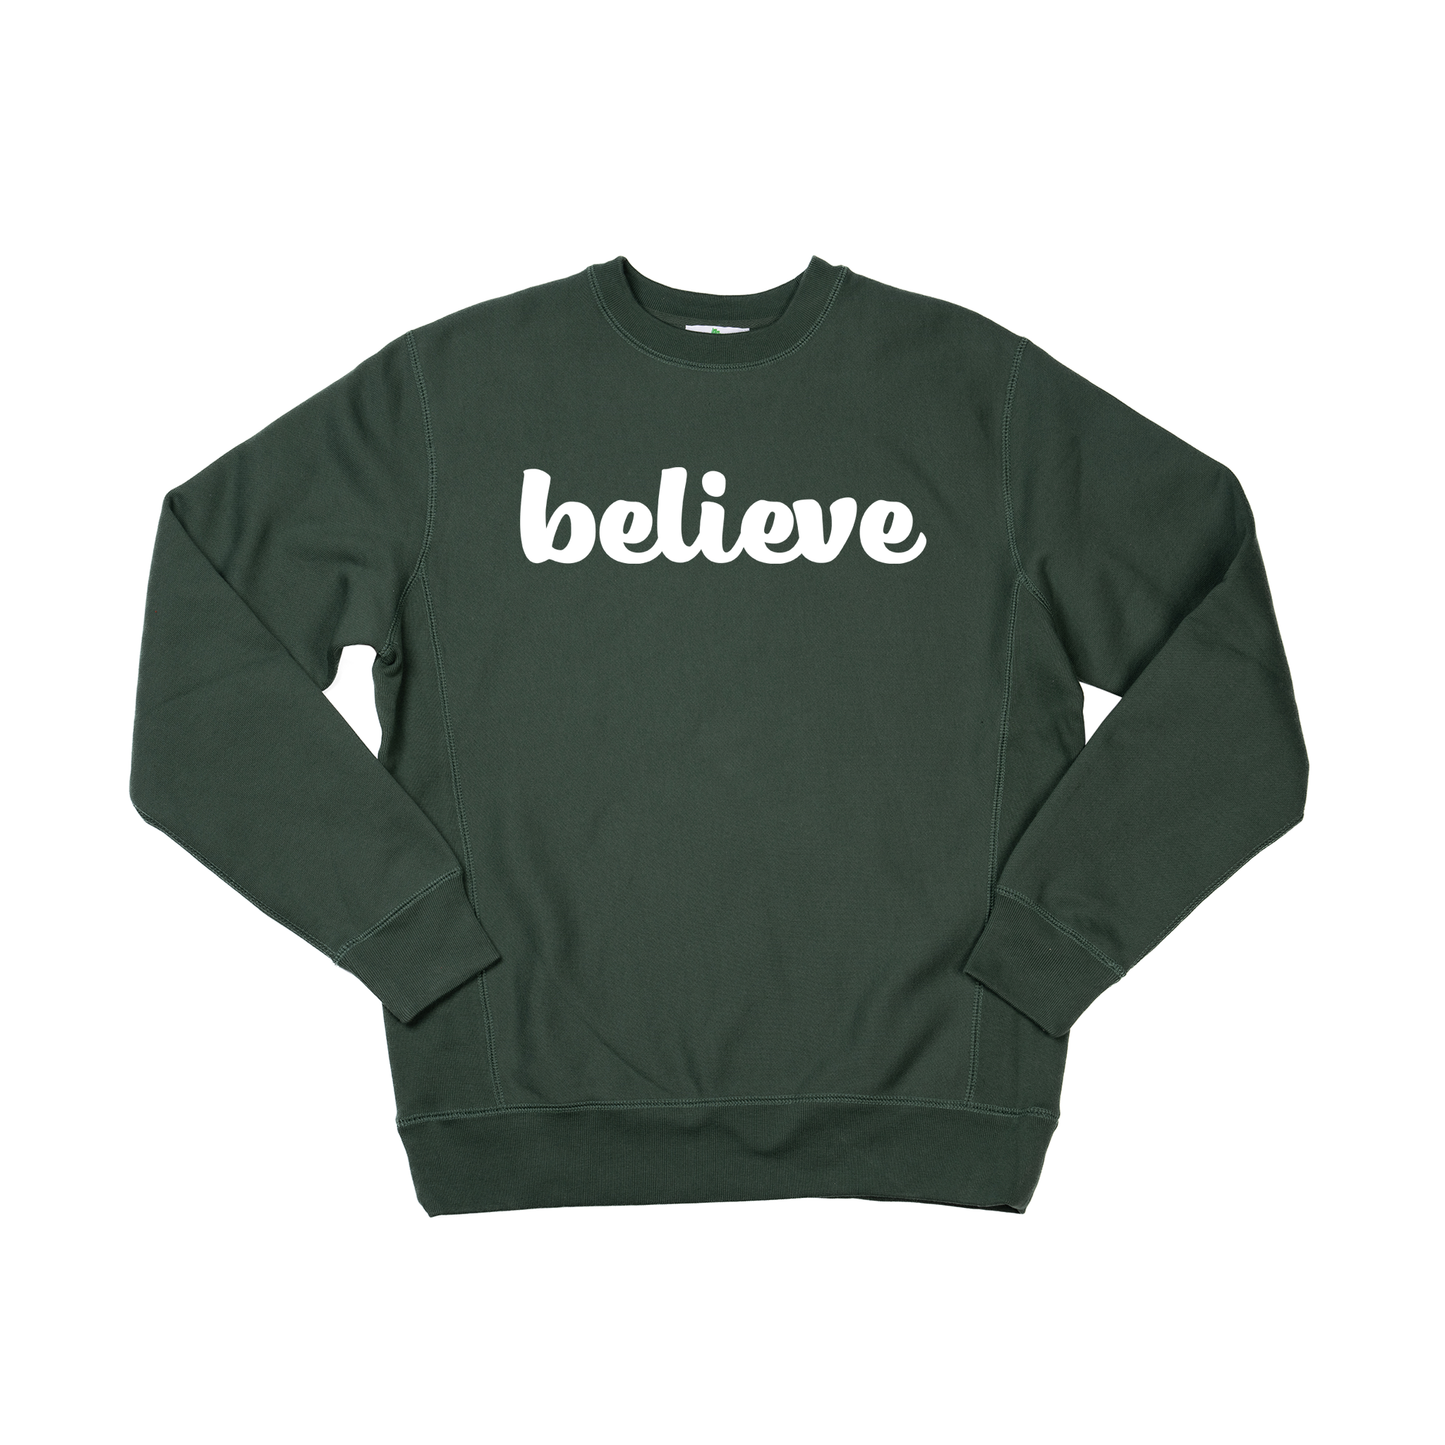 Believe (Thick Cursive, White) - Heavyweight Sweatshirt (Pine)